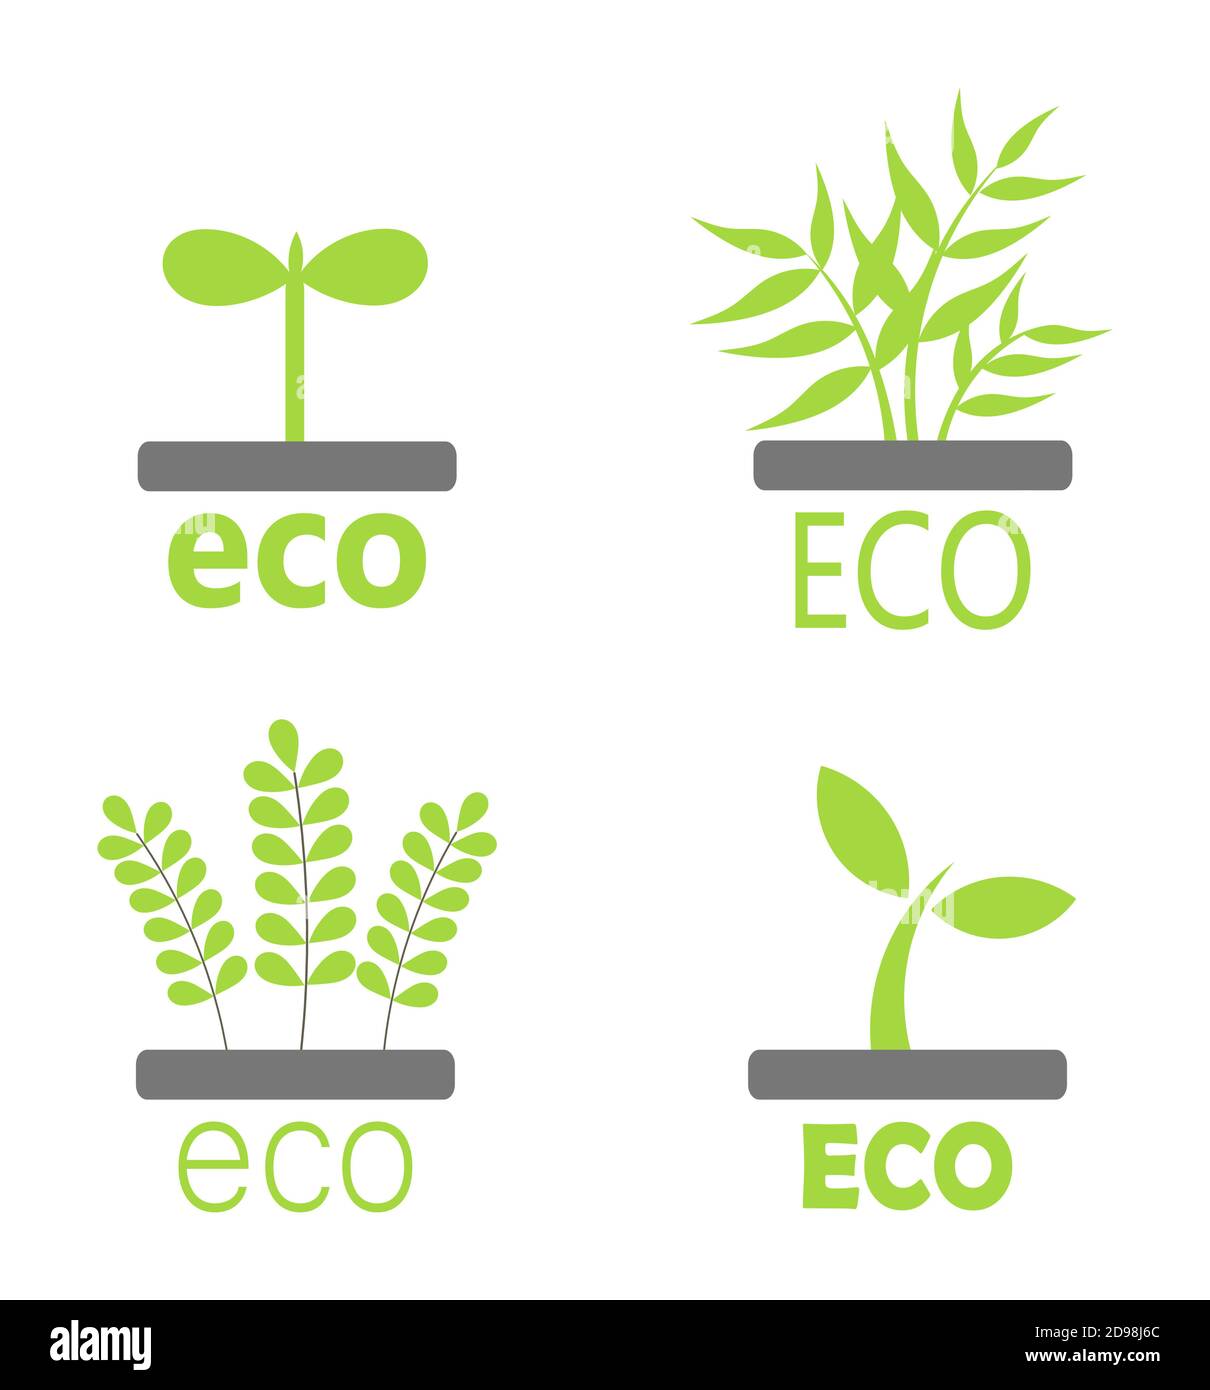 Eco plant